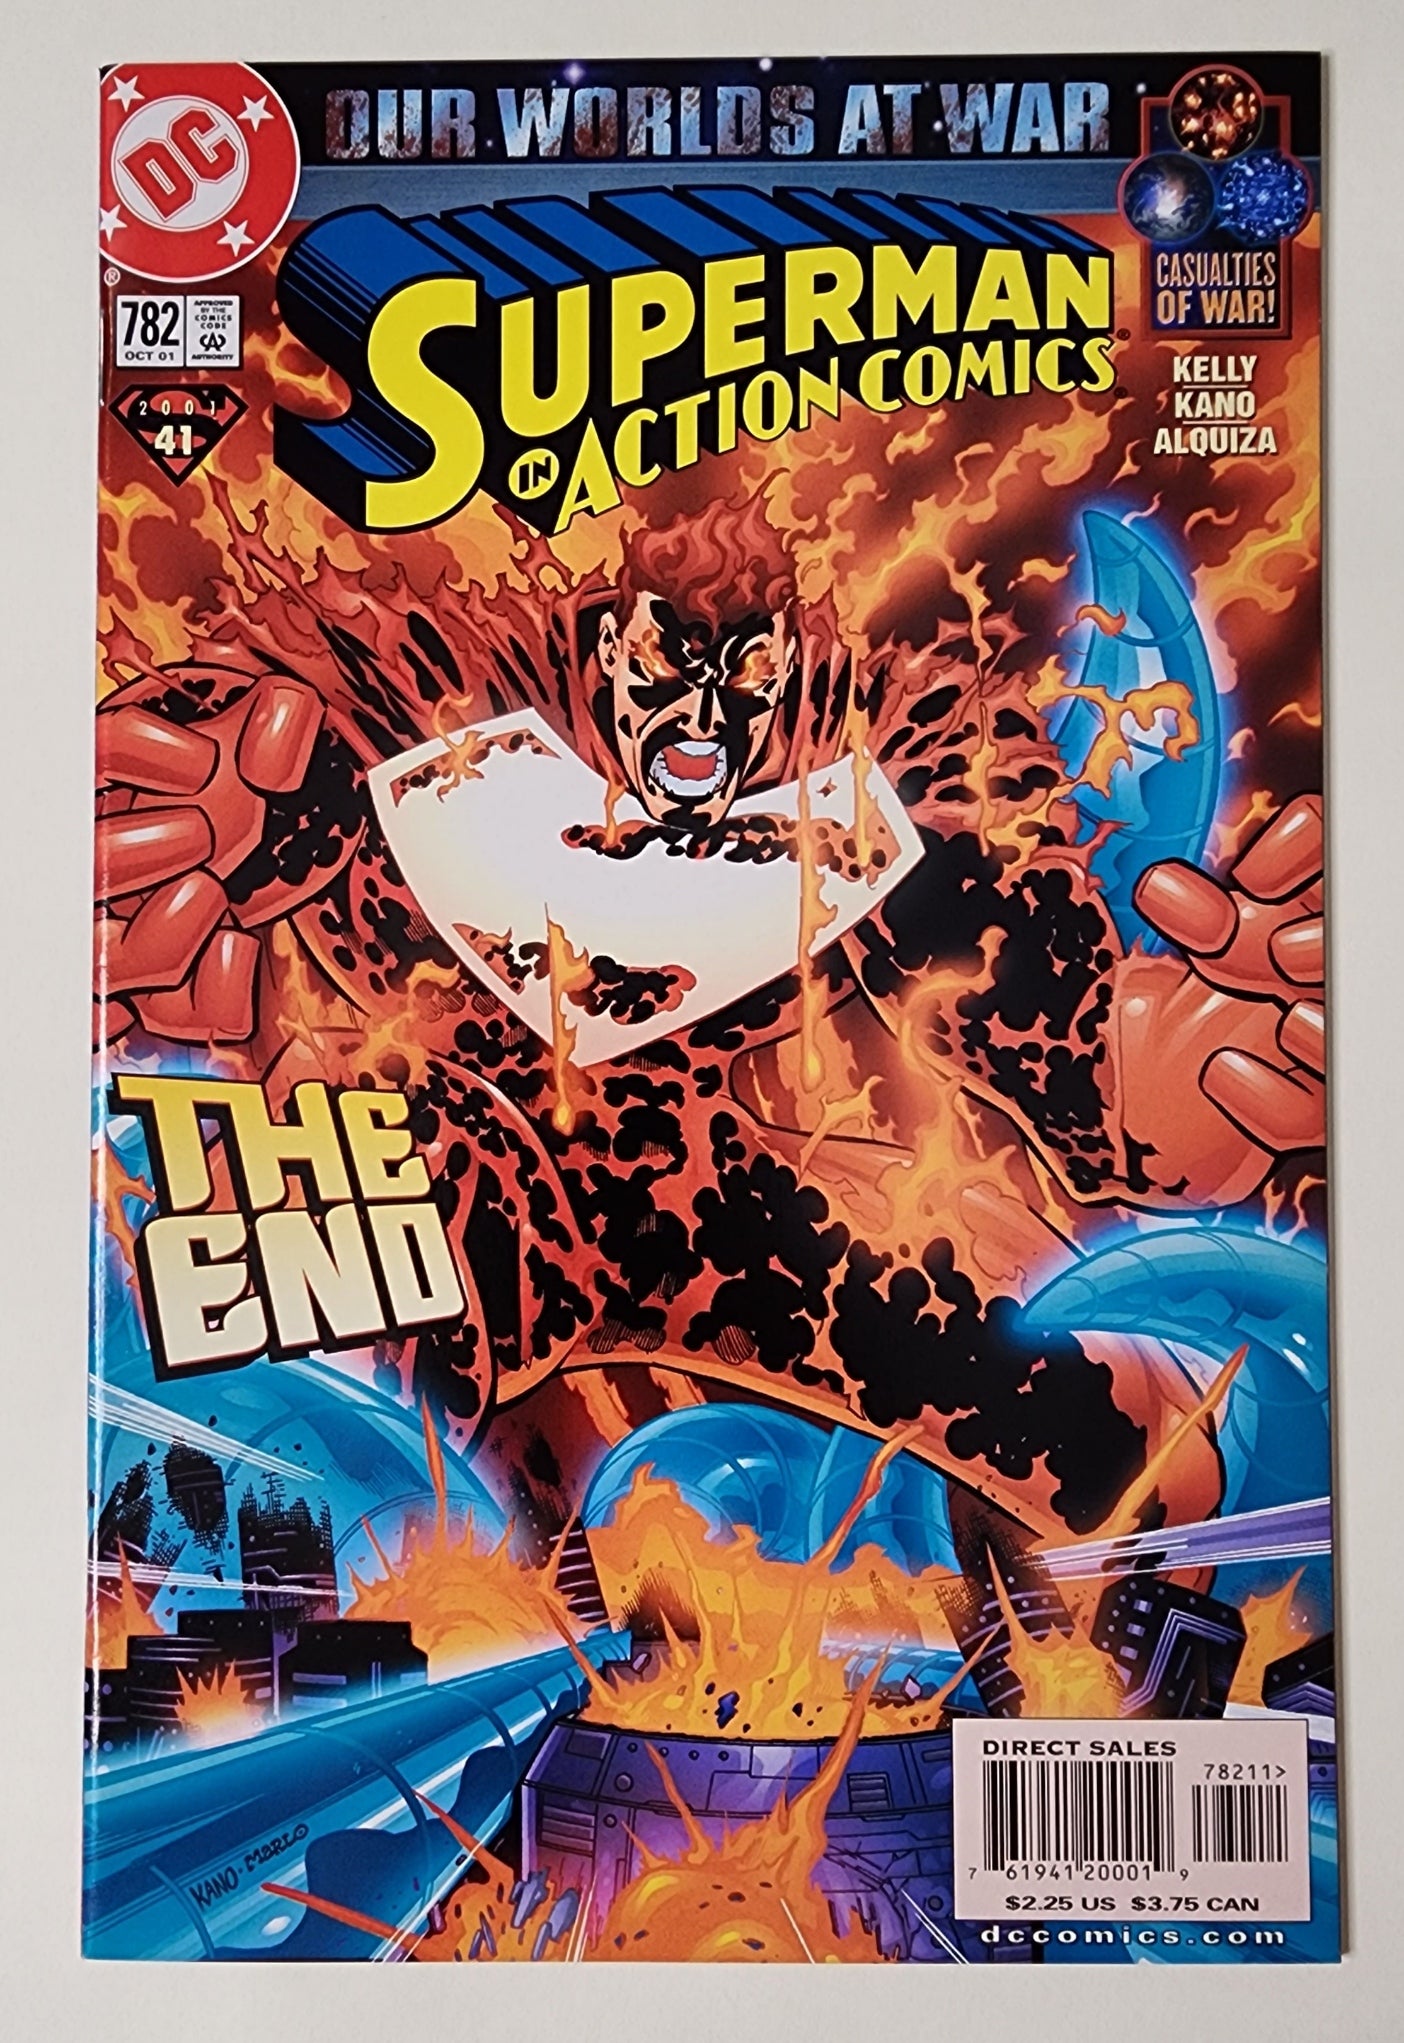 Action Comics #782 (VF)